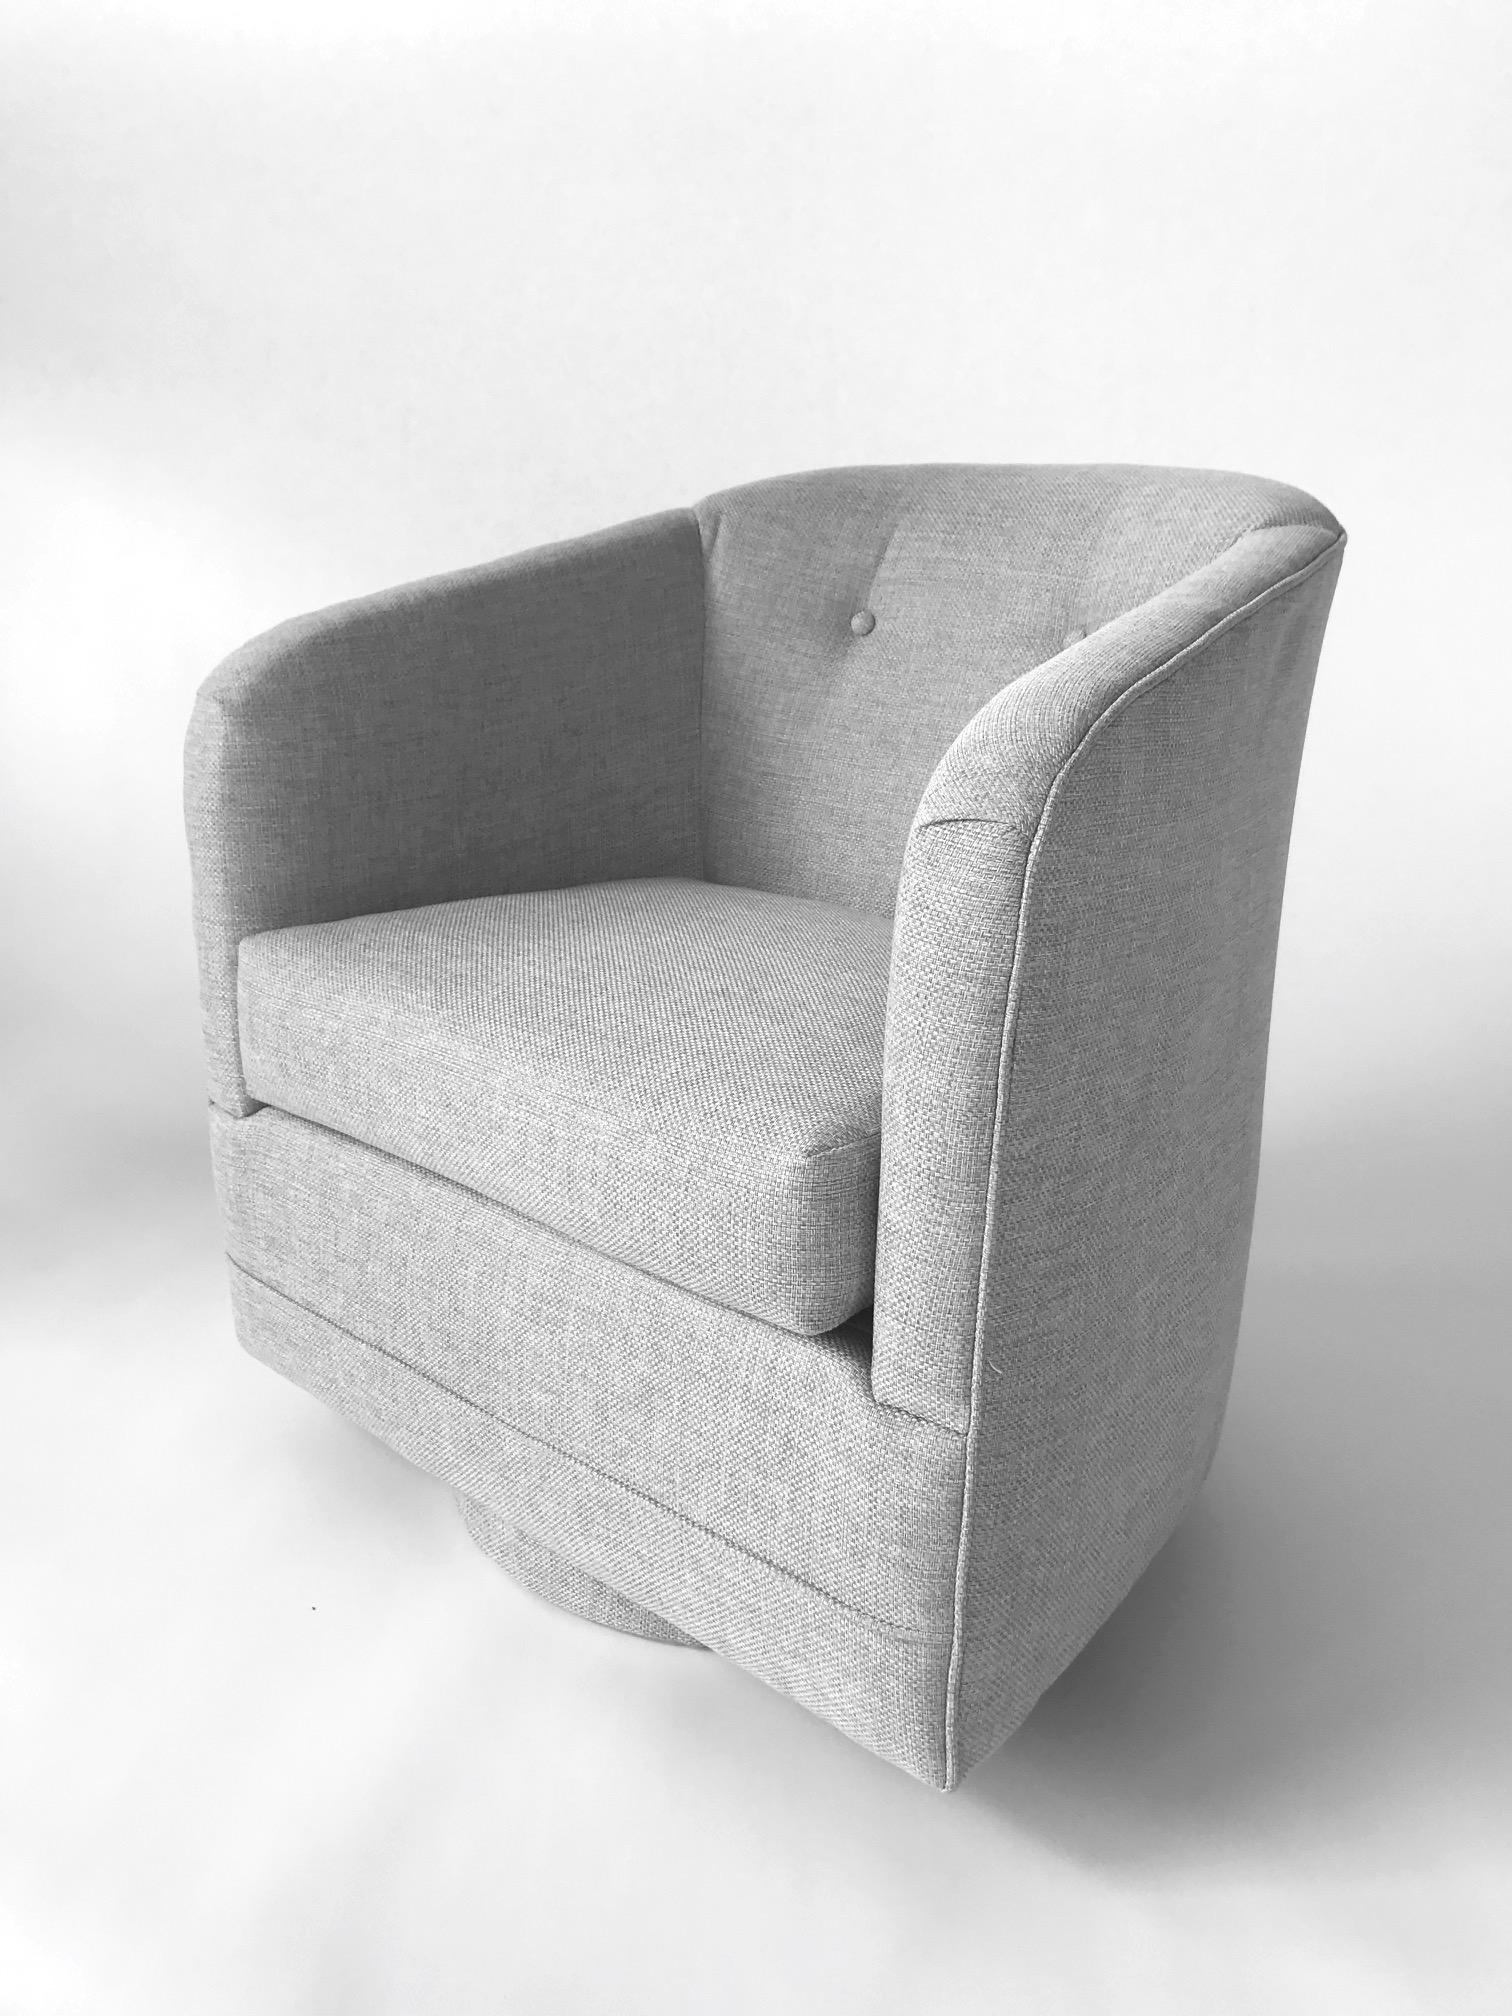 1970s Woven Upholstered Swivel Lounge Chair by Milo Baughman (amerikanisch)